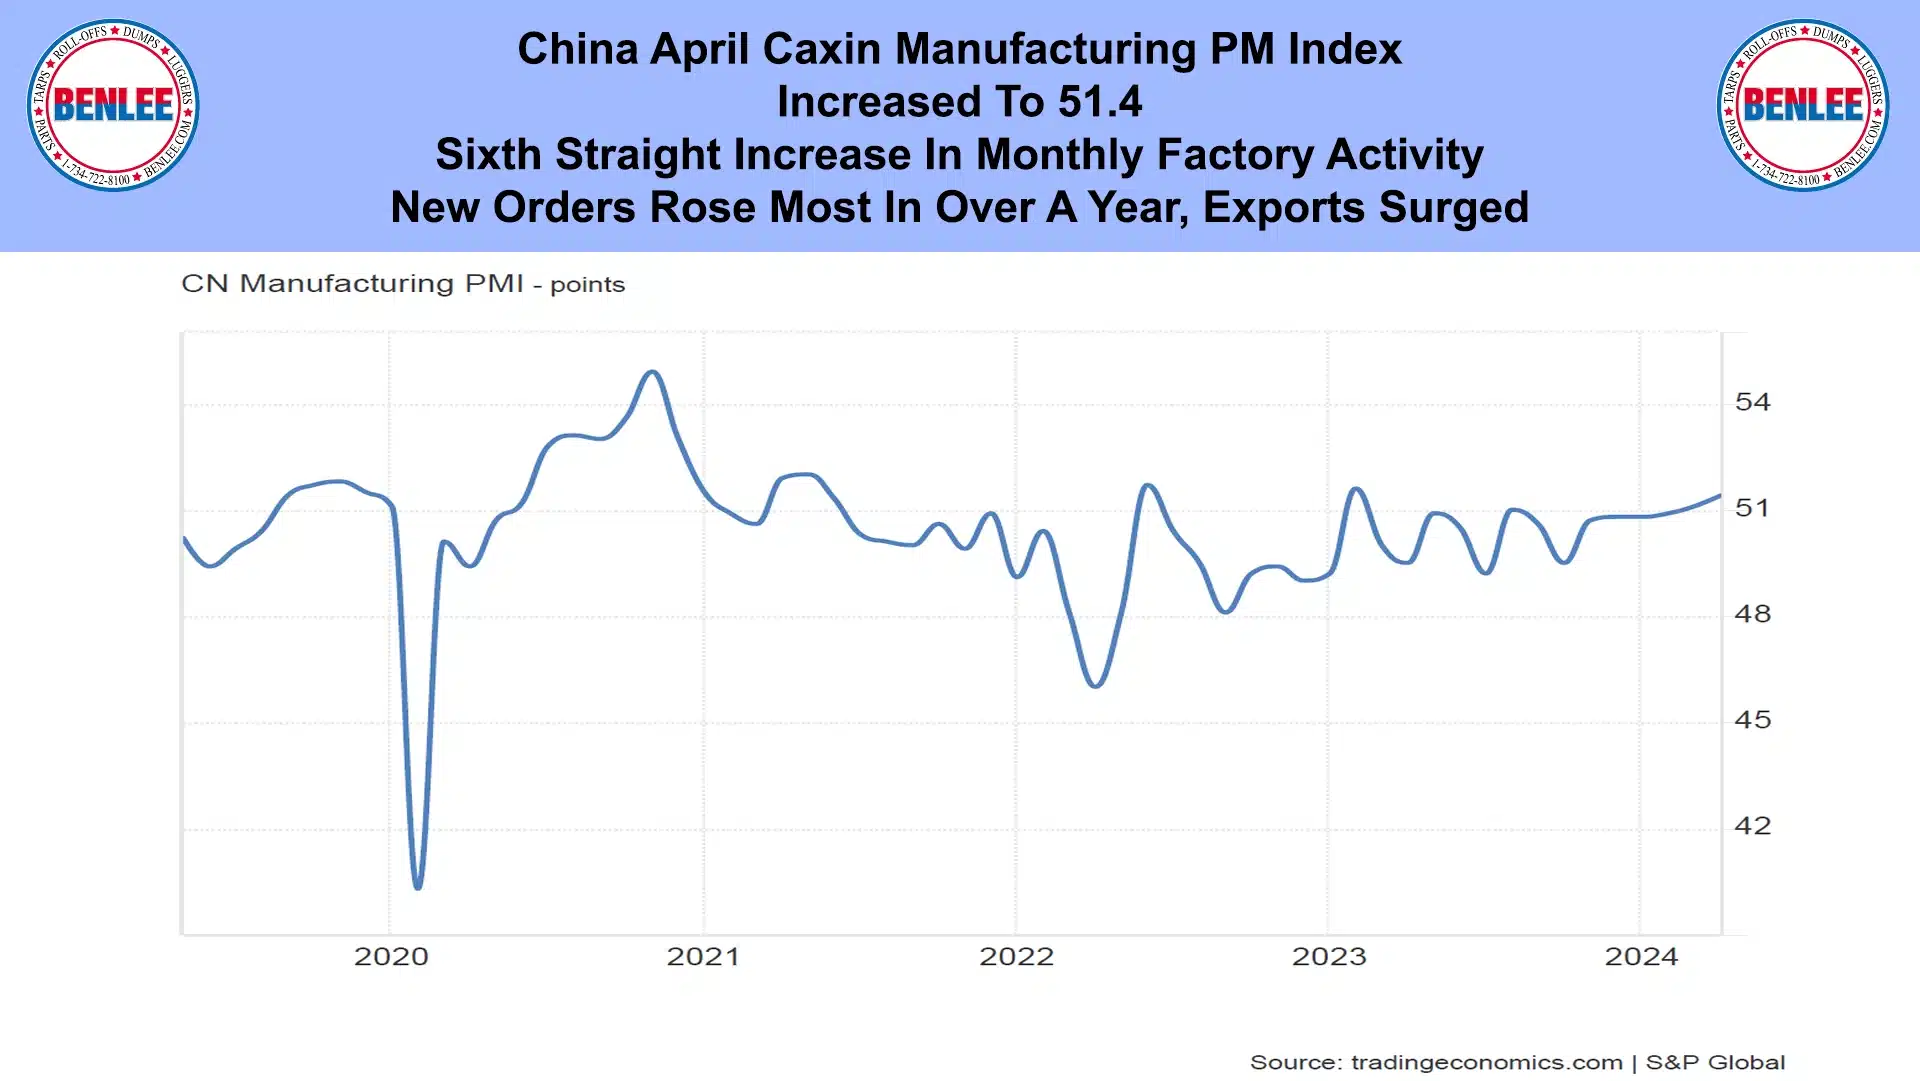 China April Caxin Manufacturing PM Index